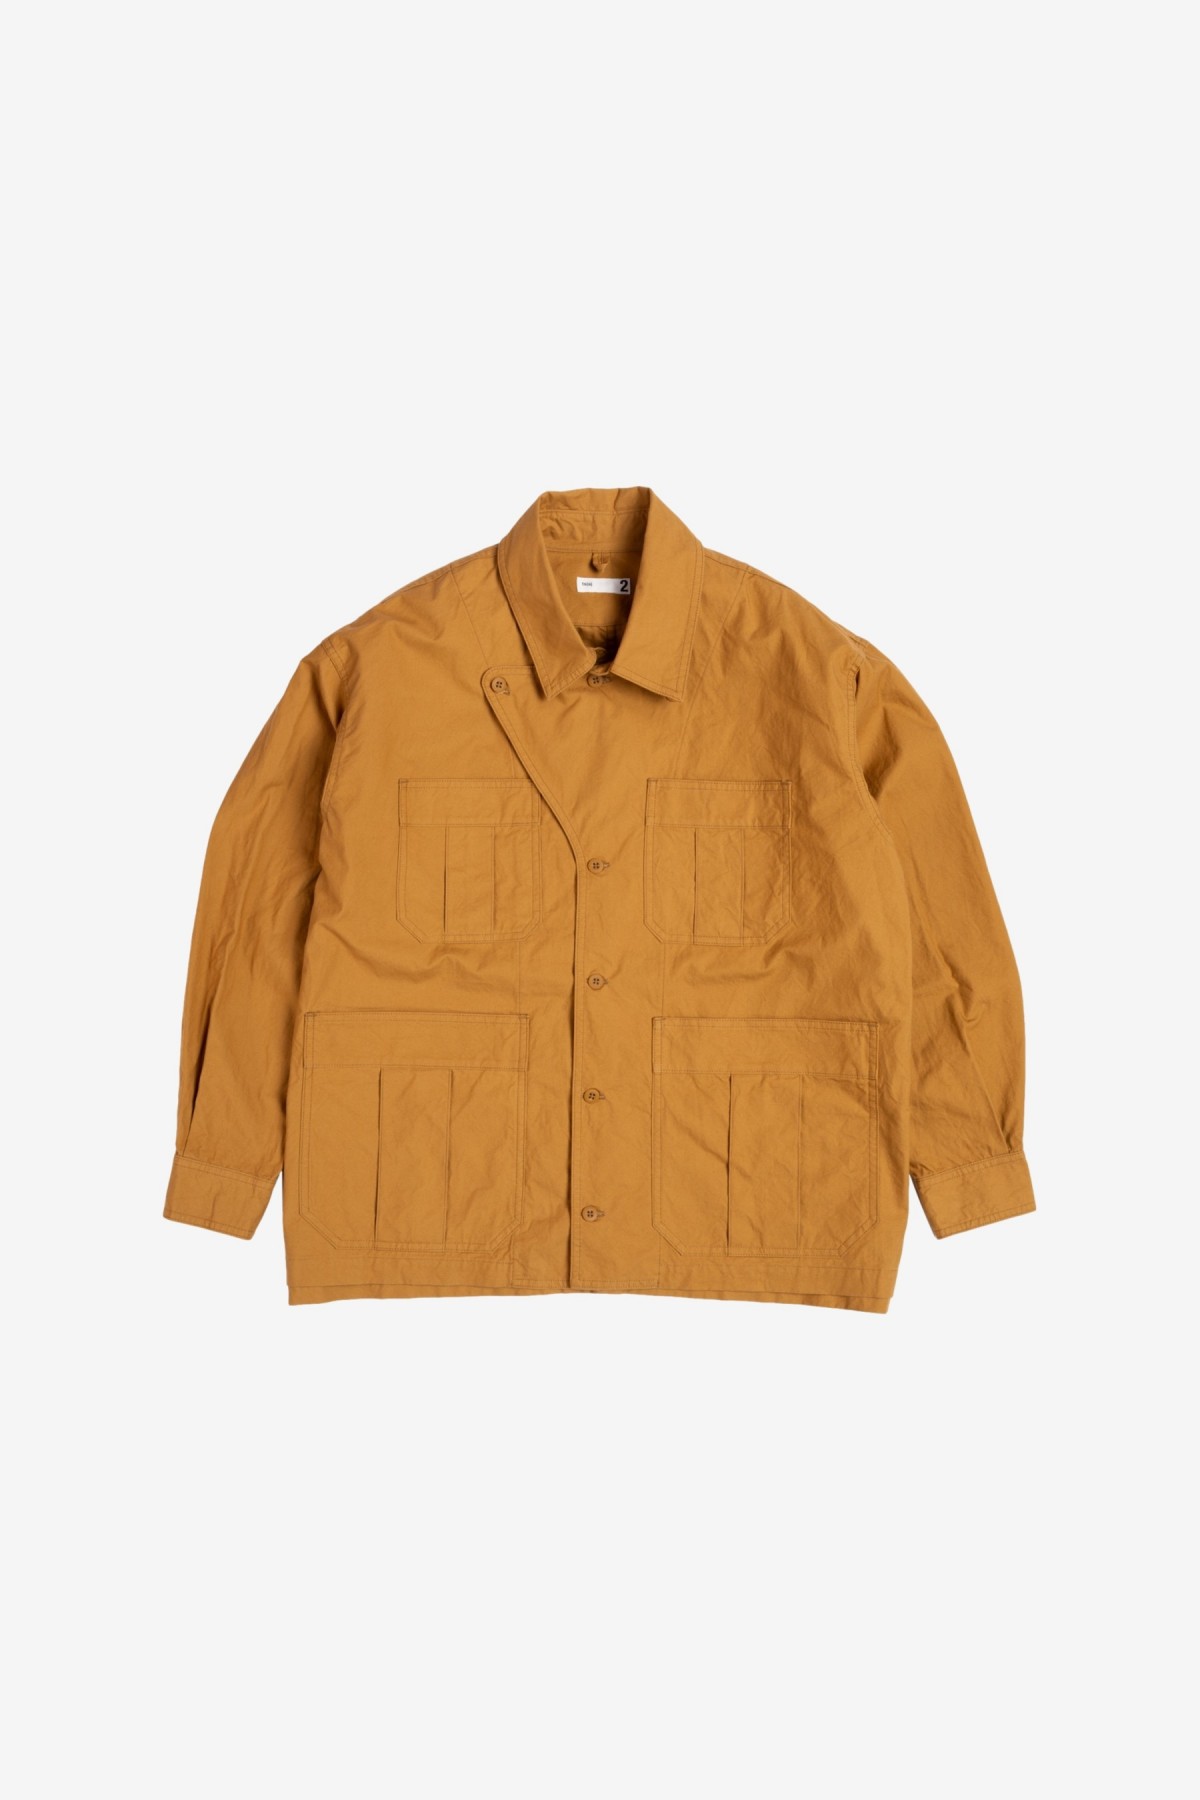 ts(s) High Density Cotton Canvas Cloth Military Shirt Jacket in Ocher